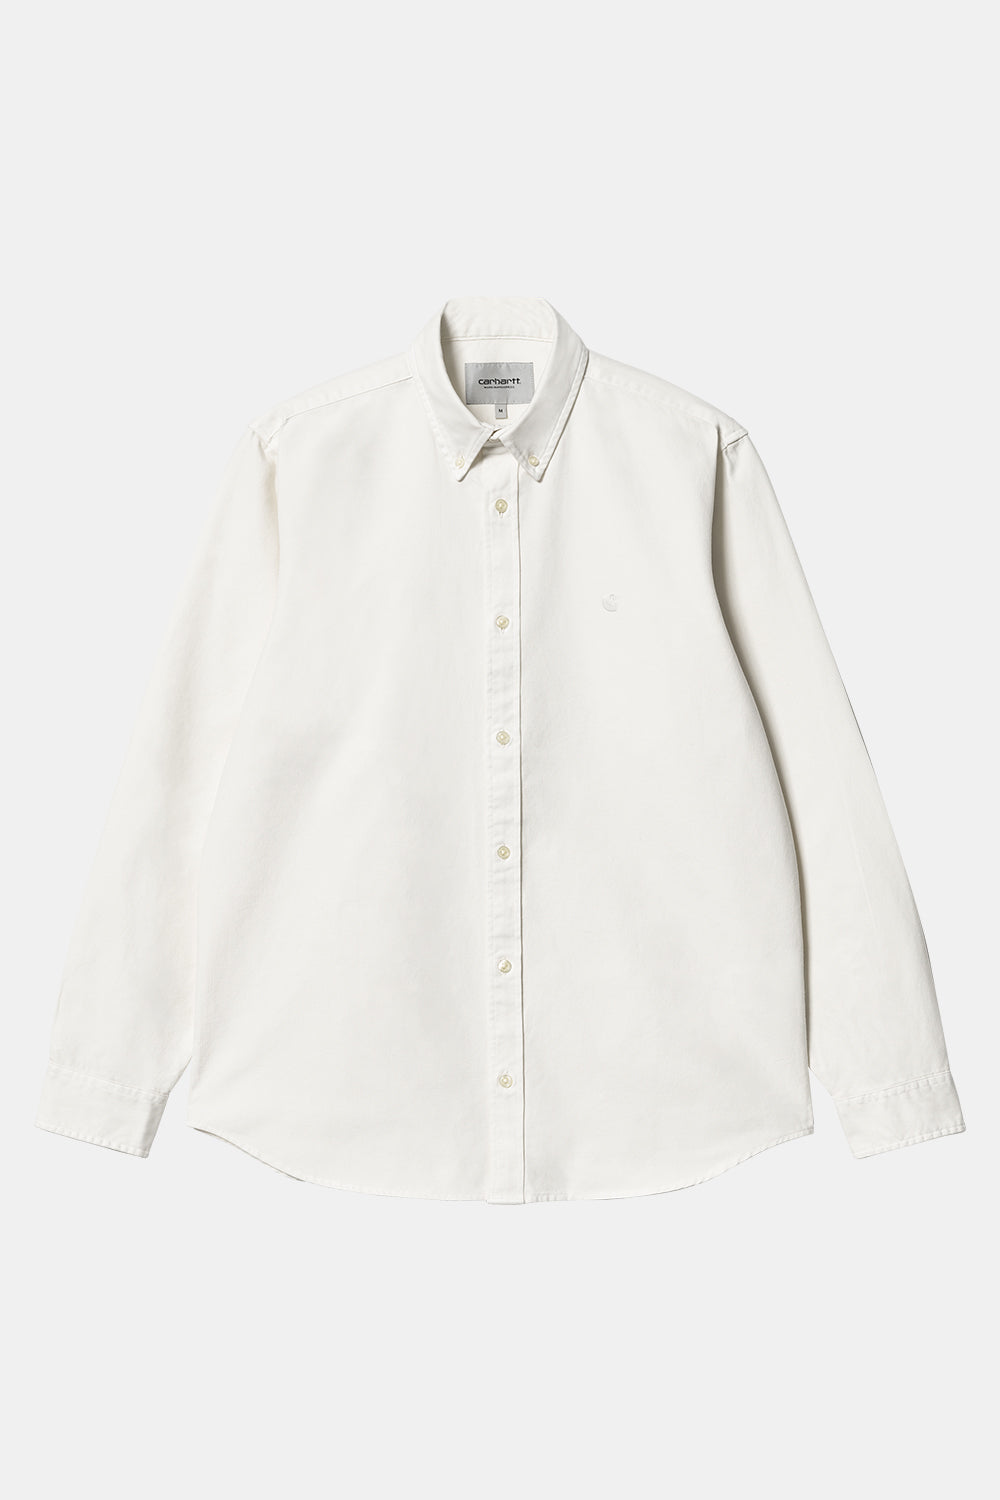 Carhartt WIP Long Sleeve Bolton Shirt (White)